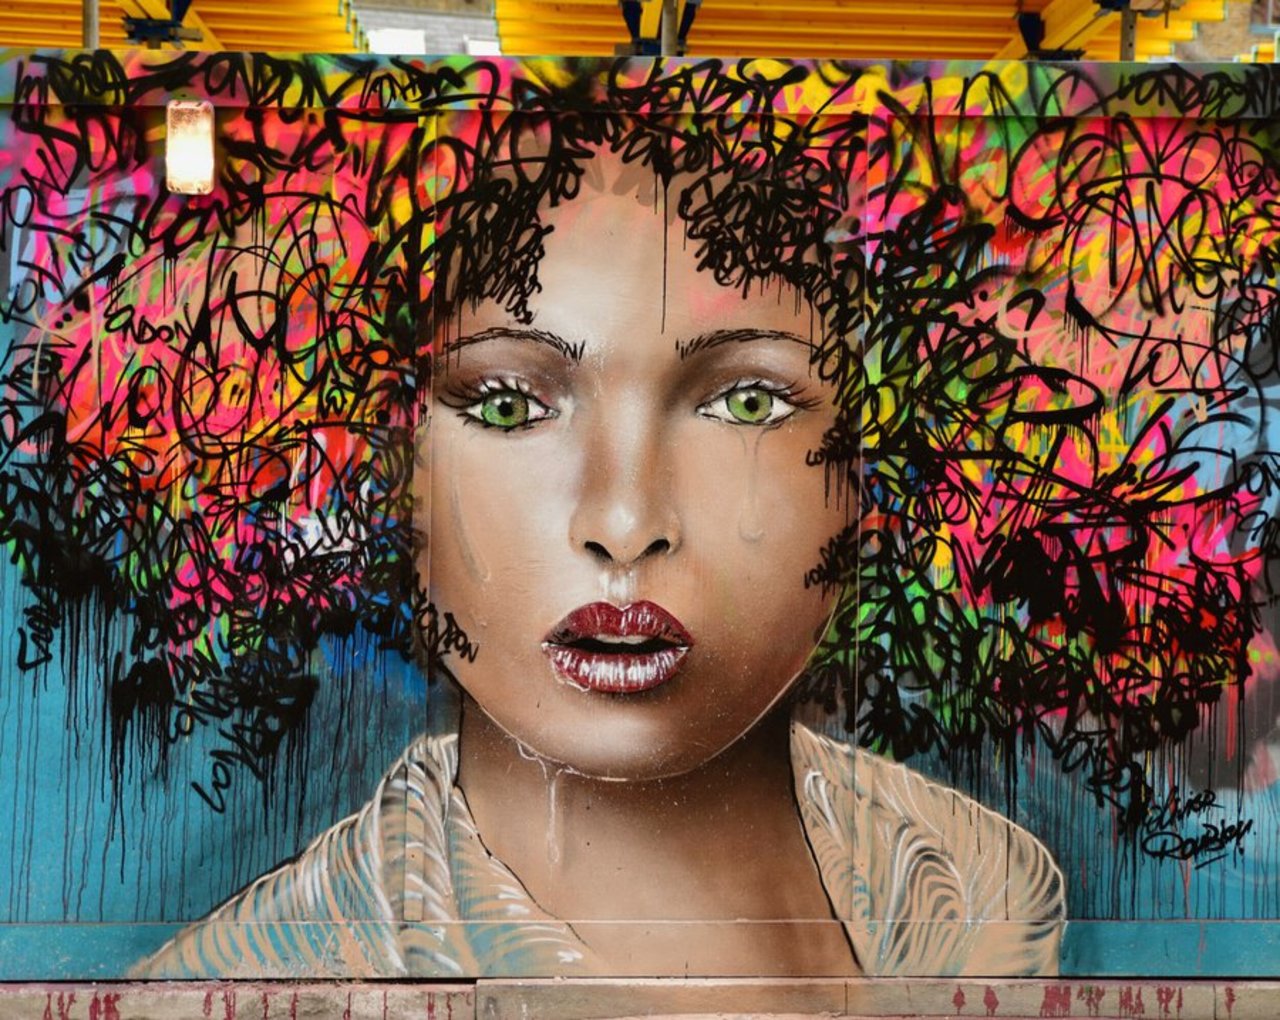 We love this piece by #OlivierRoubieu (http://globalstreetart.com/olivier-roubieu)! Graff-style cursive scrawls replicate curls so well! -- Piece painted in the #UK. -- #globalstreetart #streetart #art #graffiti https://t.co/DDnJqD6Fb8